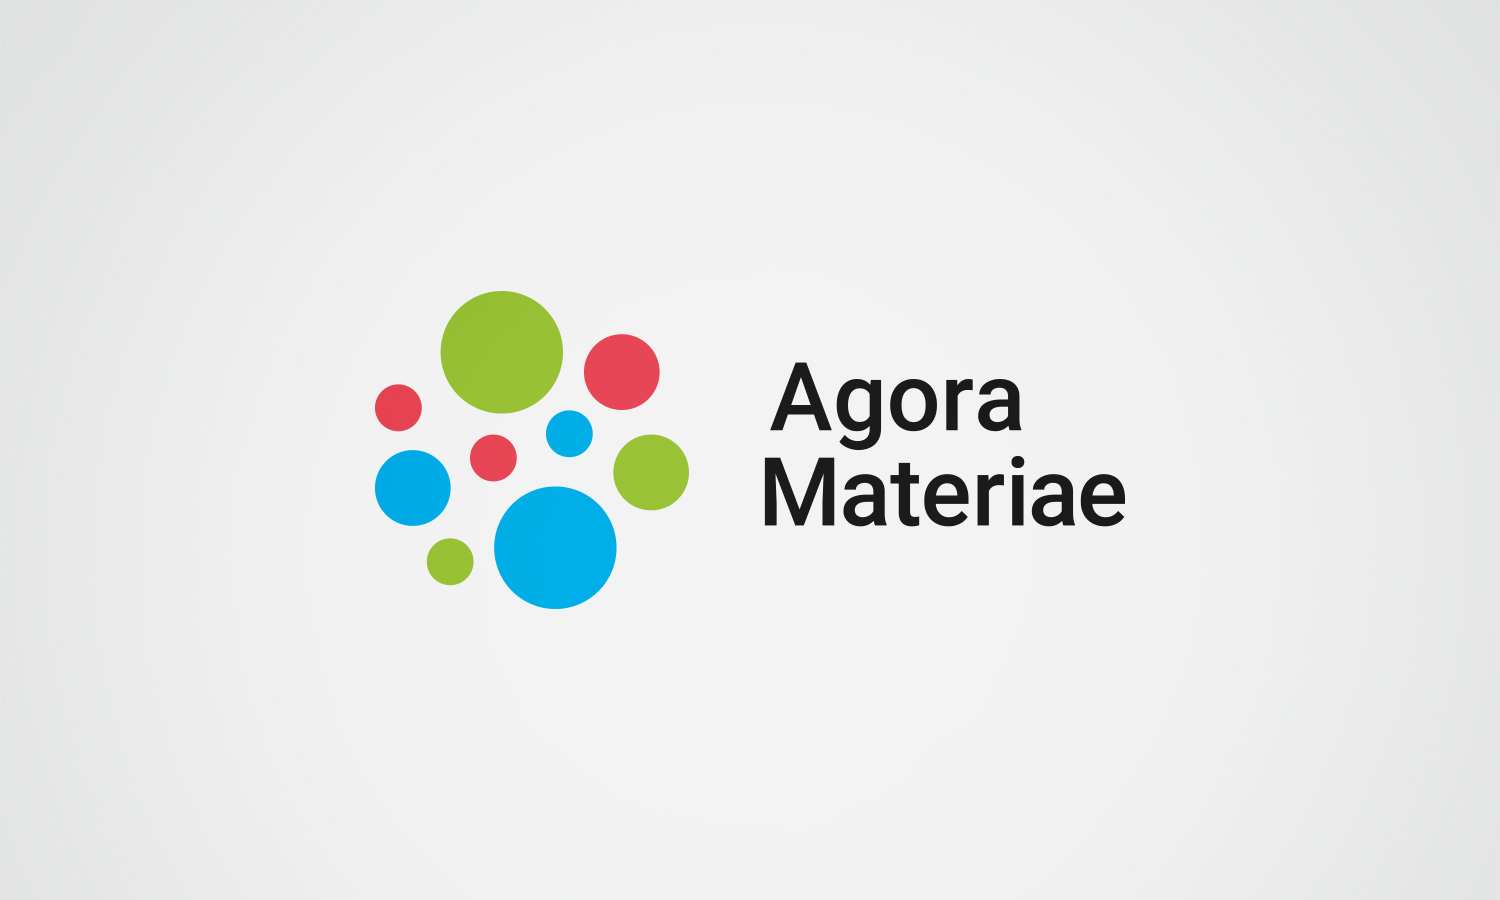 Agora Materiae by Viktor Lanneld